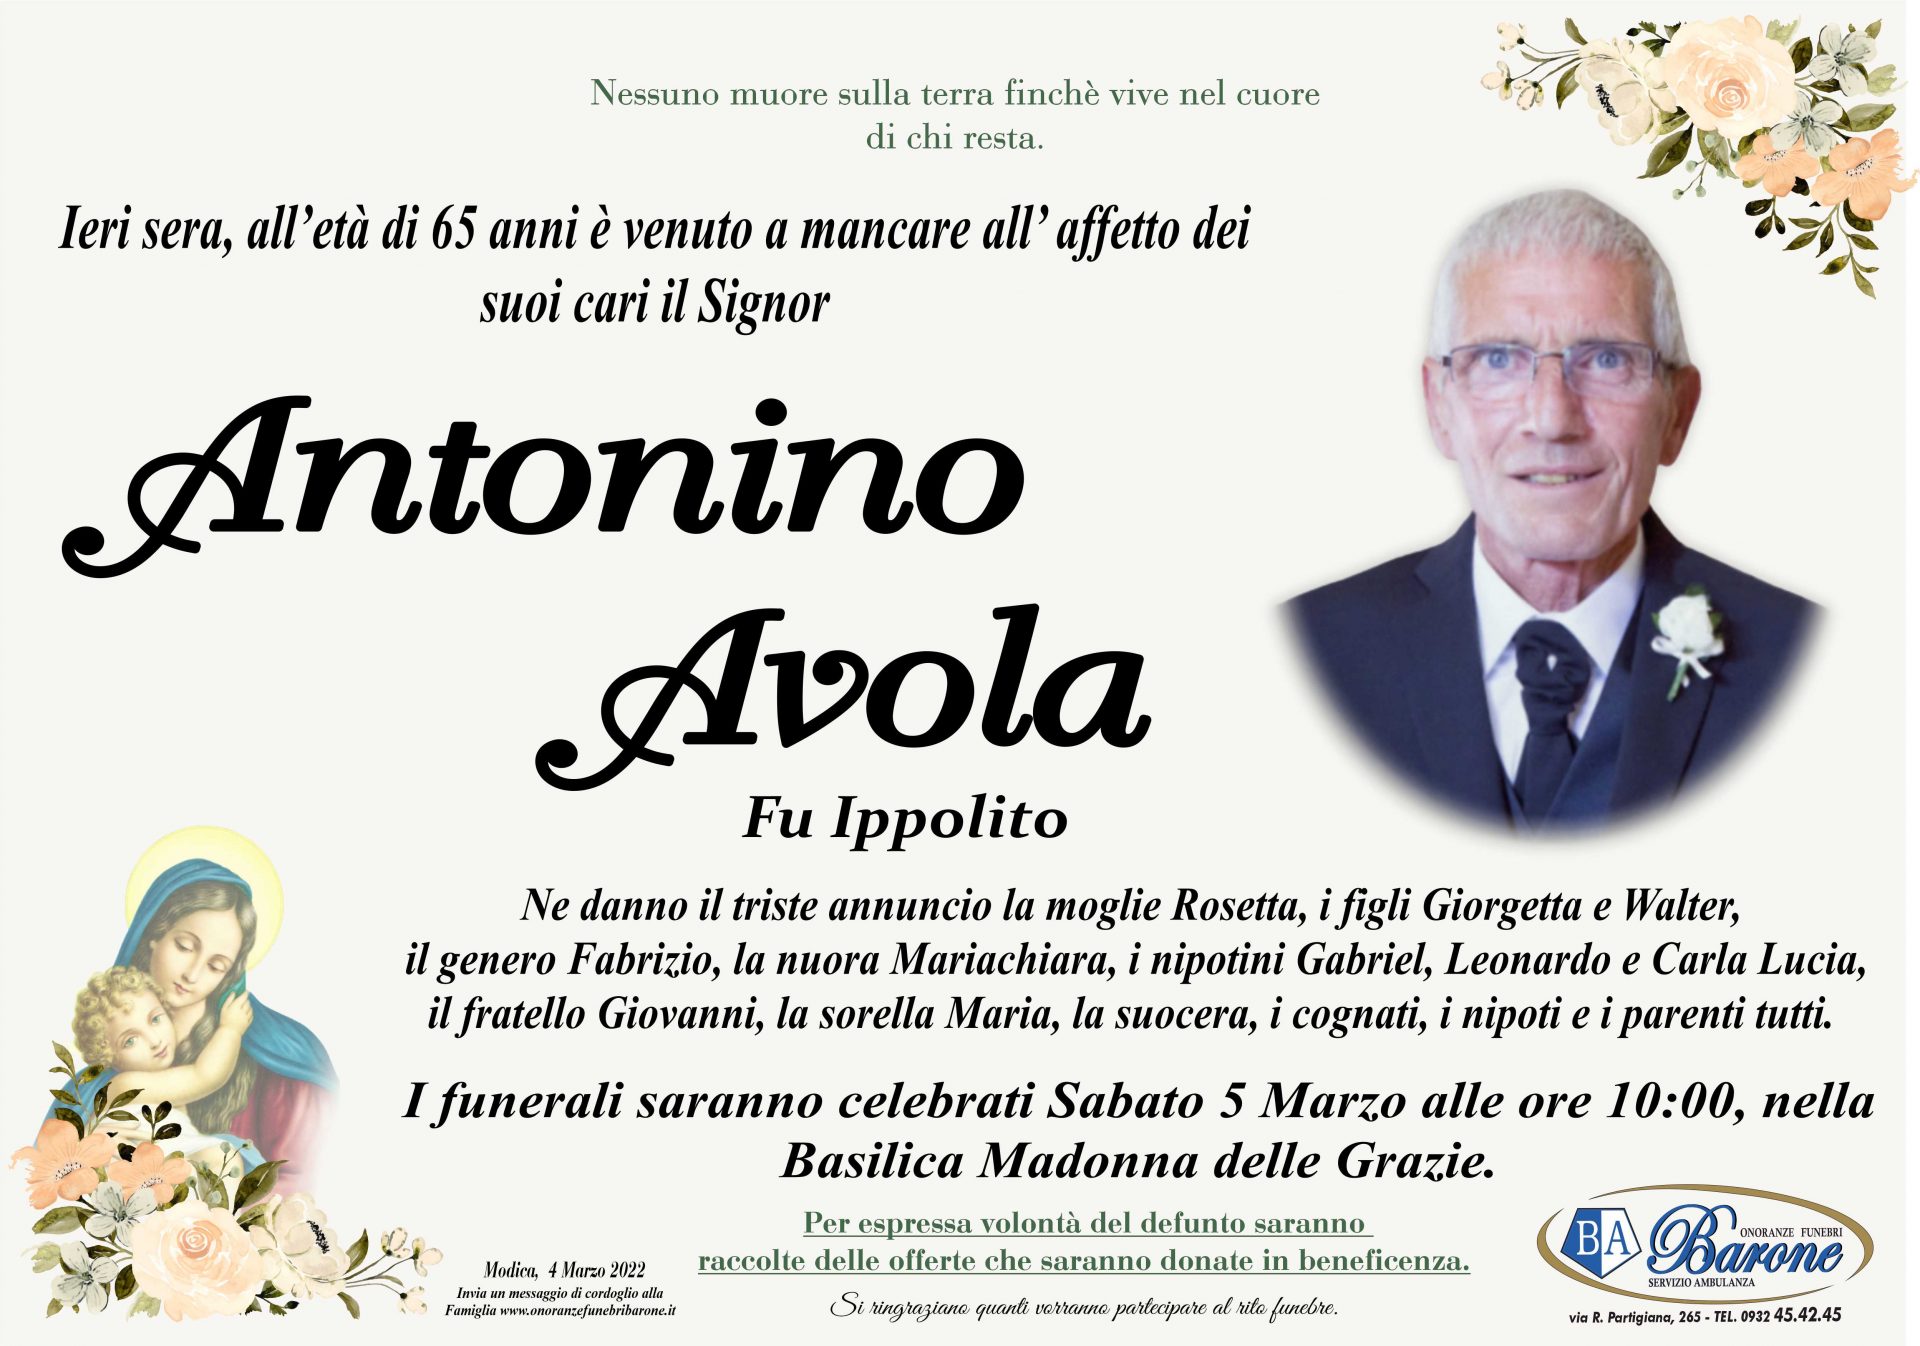 Antonino Avola